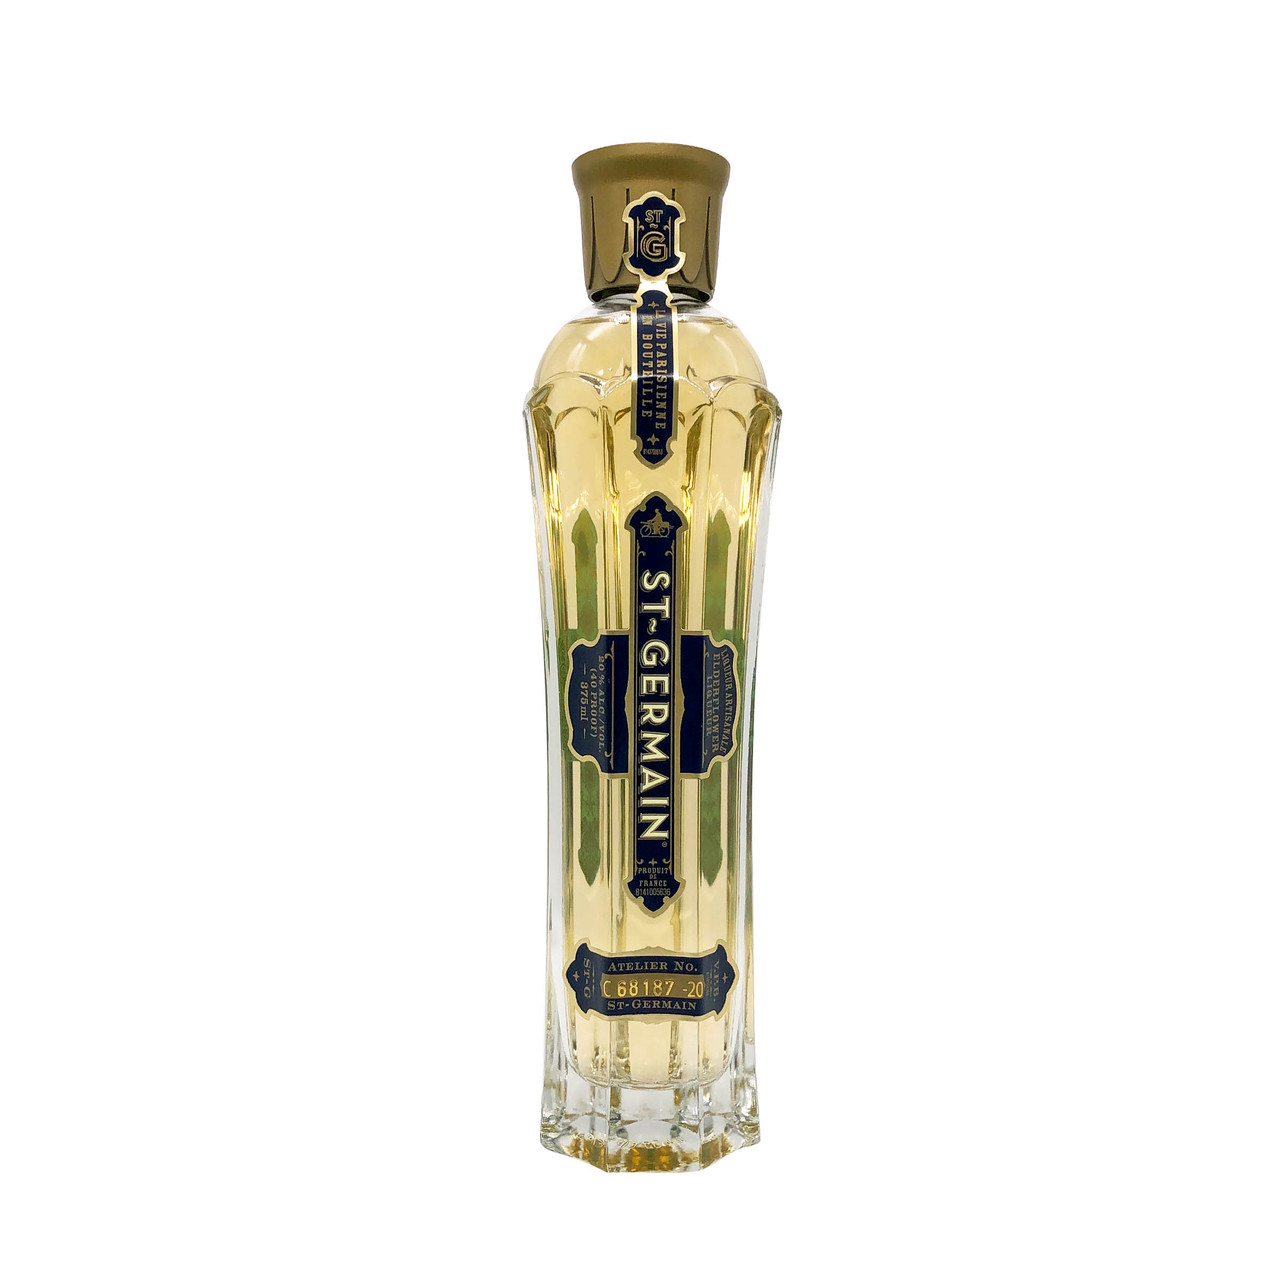 St. Germain - Elderflower Liqueur - Bottle Grove